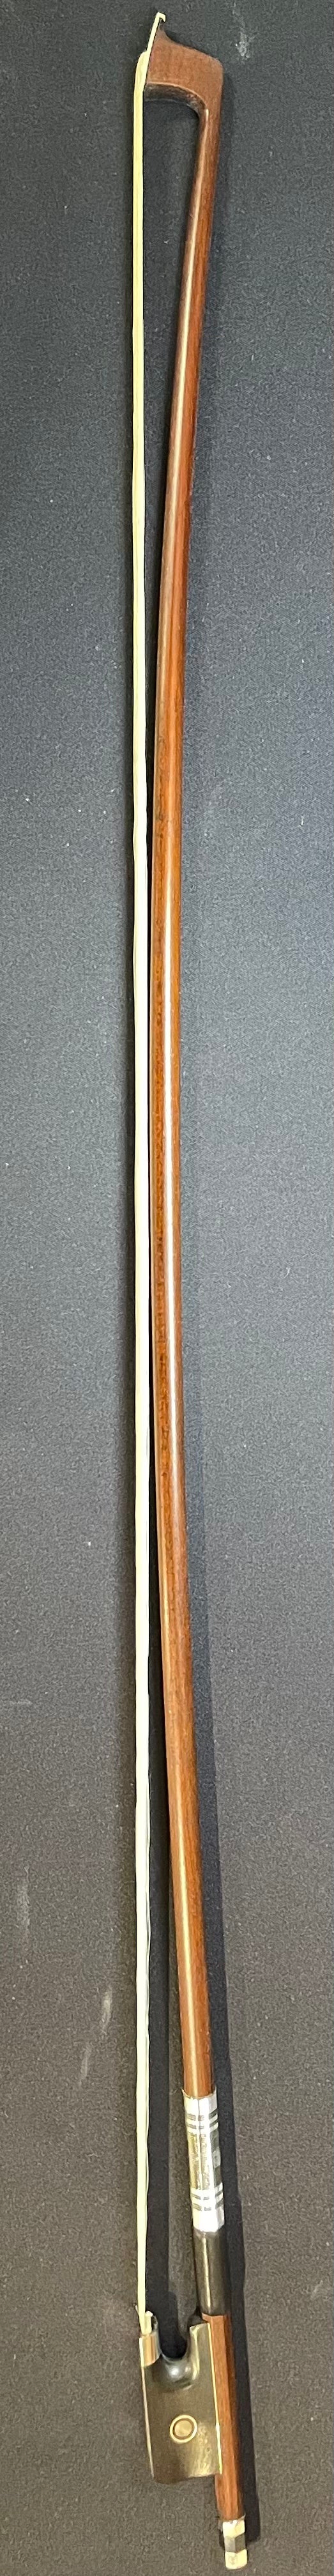 Full Size Viola Bow - XSU Wood Model